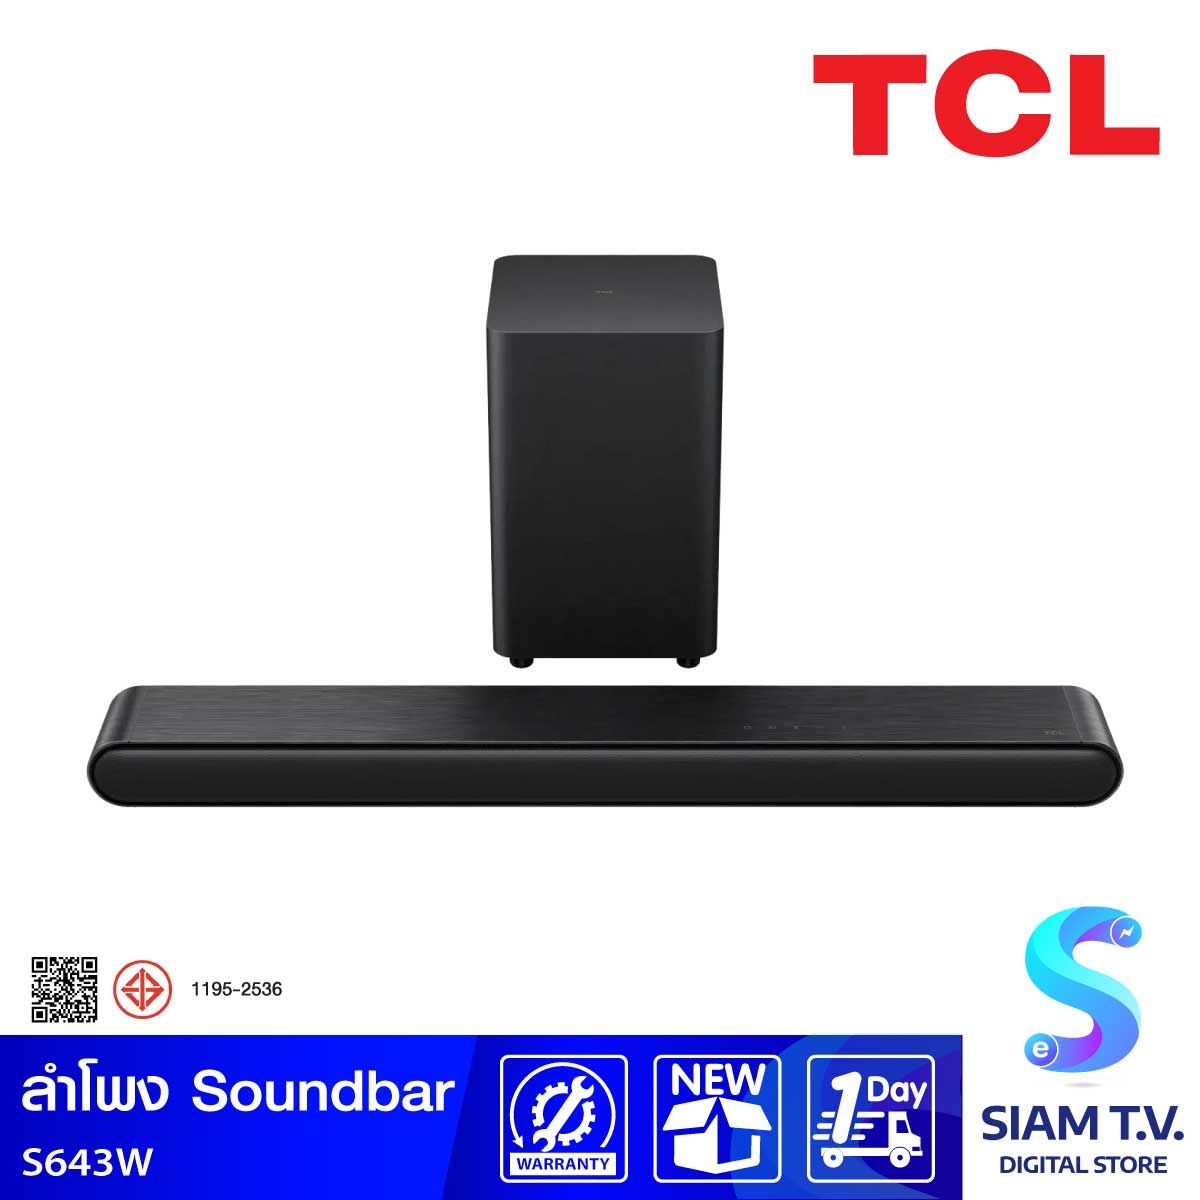 TCL ชุดเครื่องเสียง Soundbar 240W 3.1 CH รุ่น S643W ลำโพงซาวด์บาร์ Dobly Audio